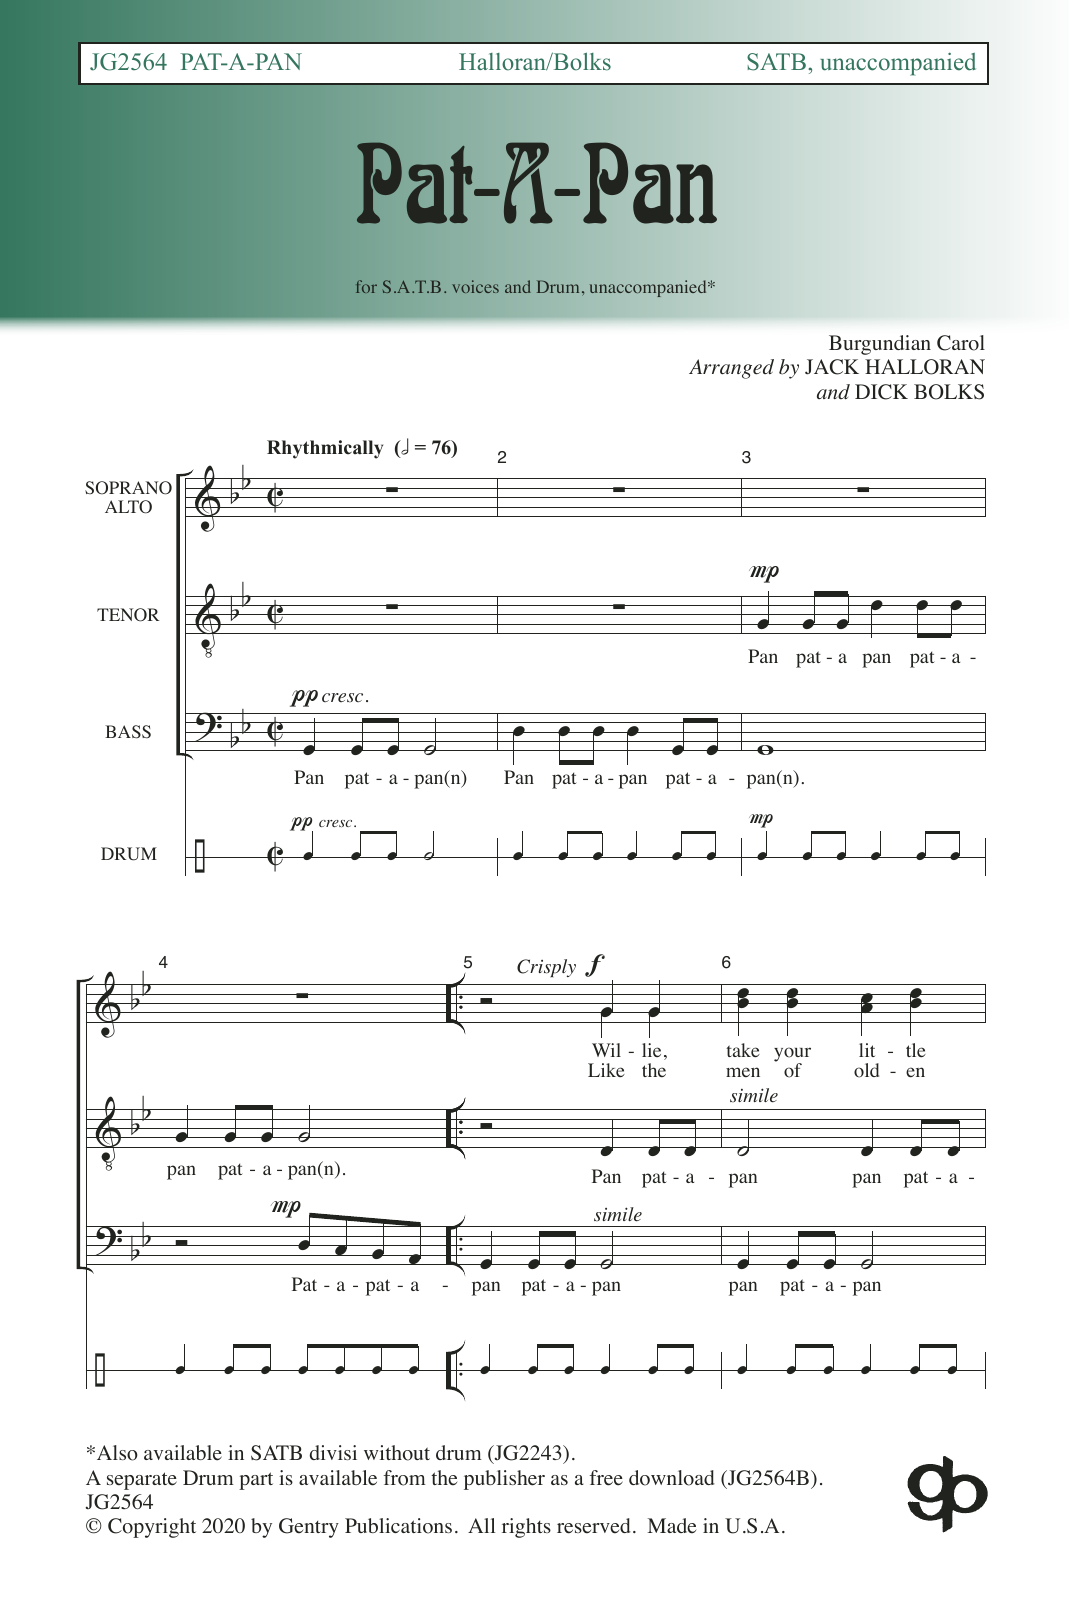 Jack Halloran & Dick Bolks Pat-a-Pan Sheet Music Notes & Chords for SATB Choir - Download or Print PDF